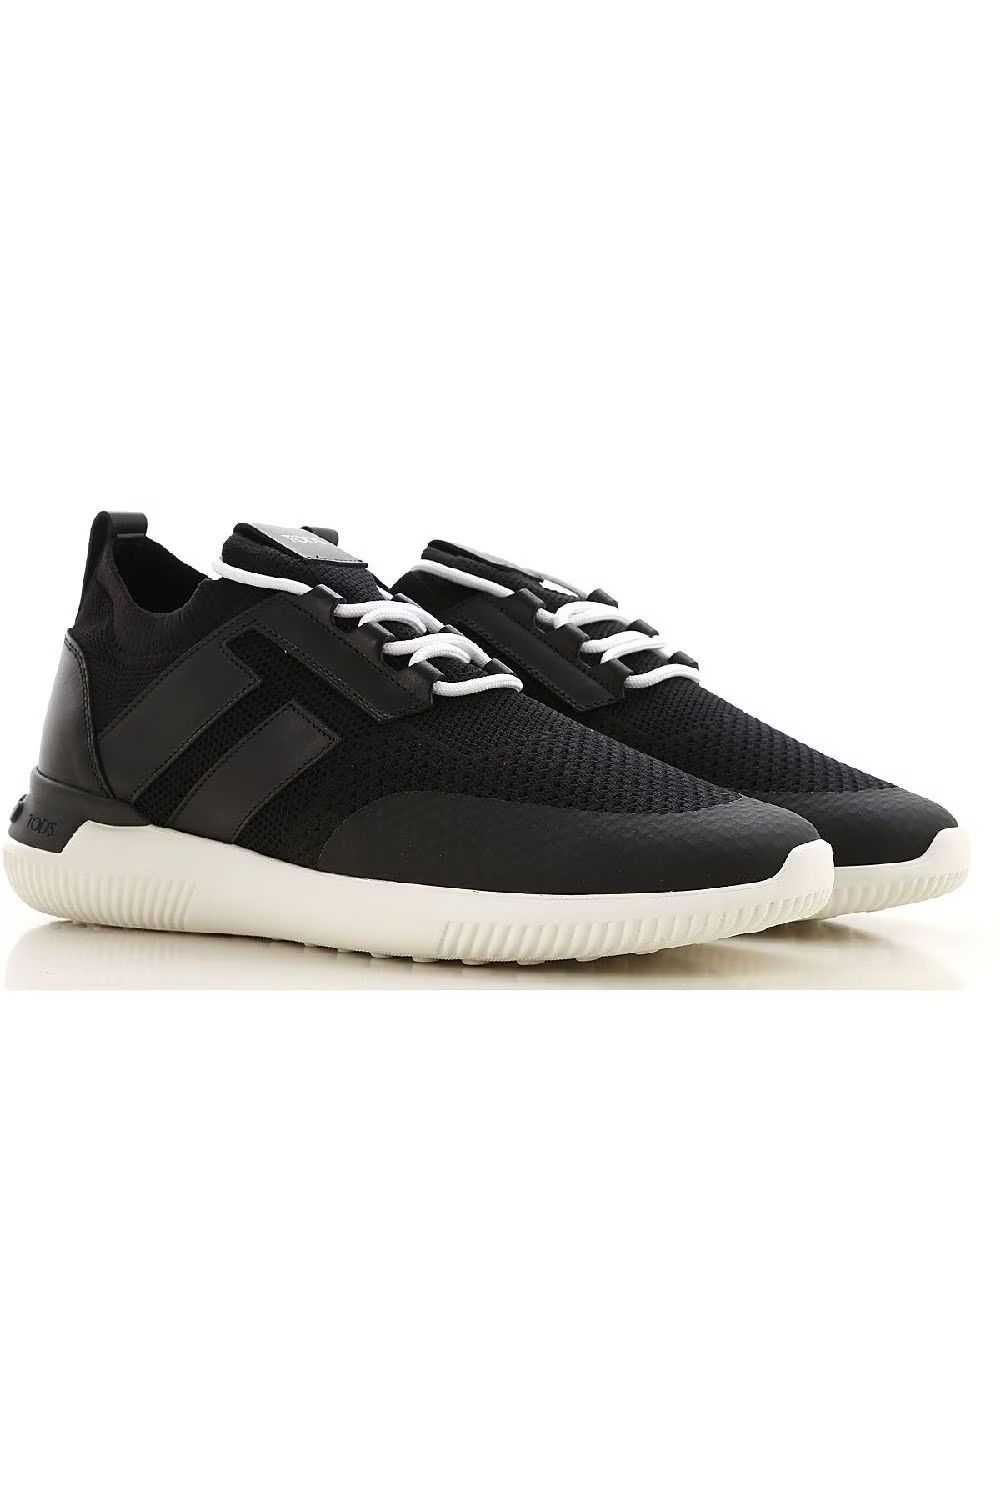 Tod's o1lxy1mk0524 Sneakers in Black & White - image 2